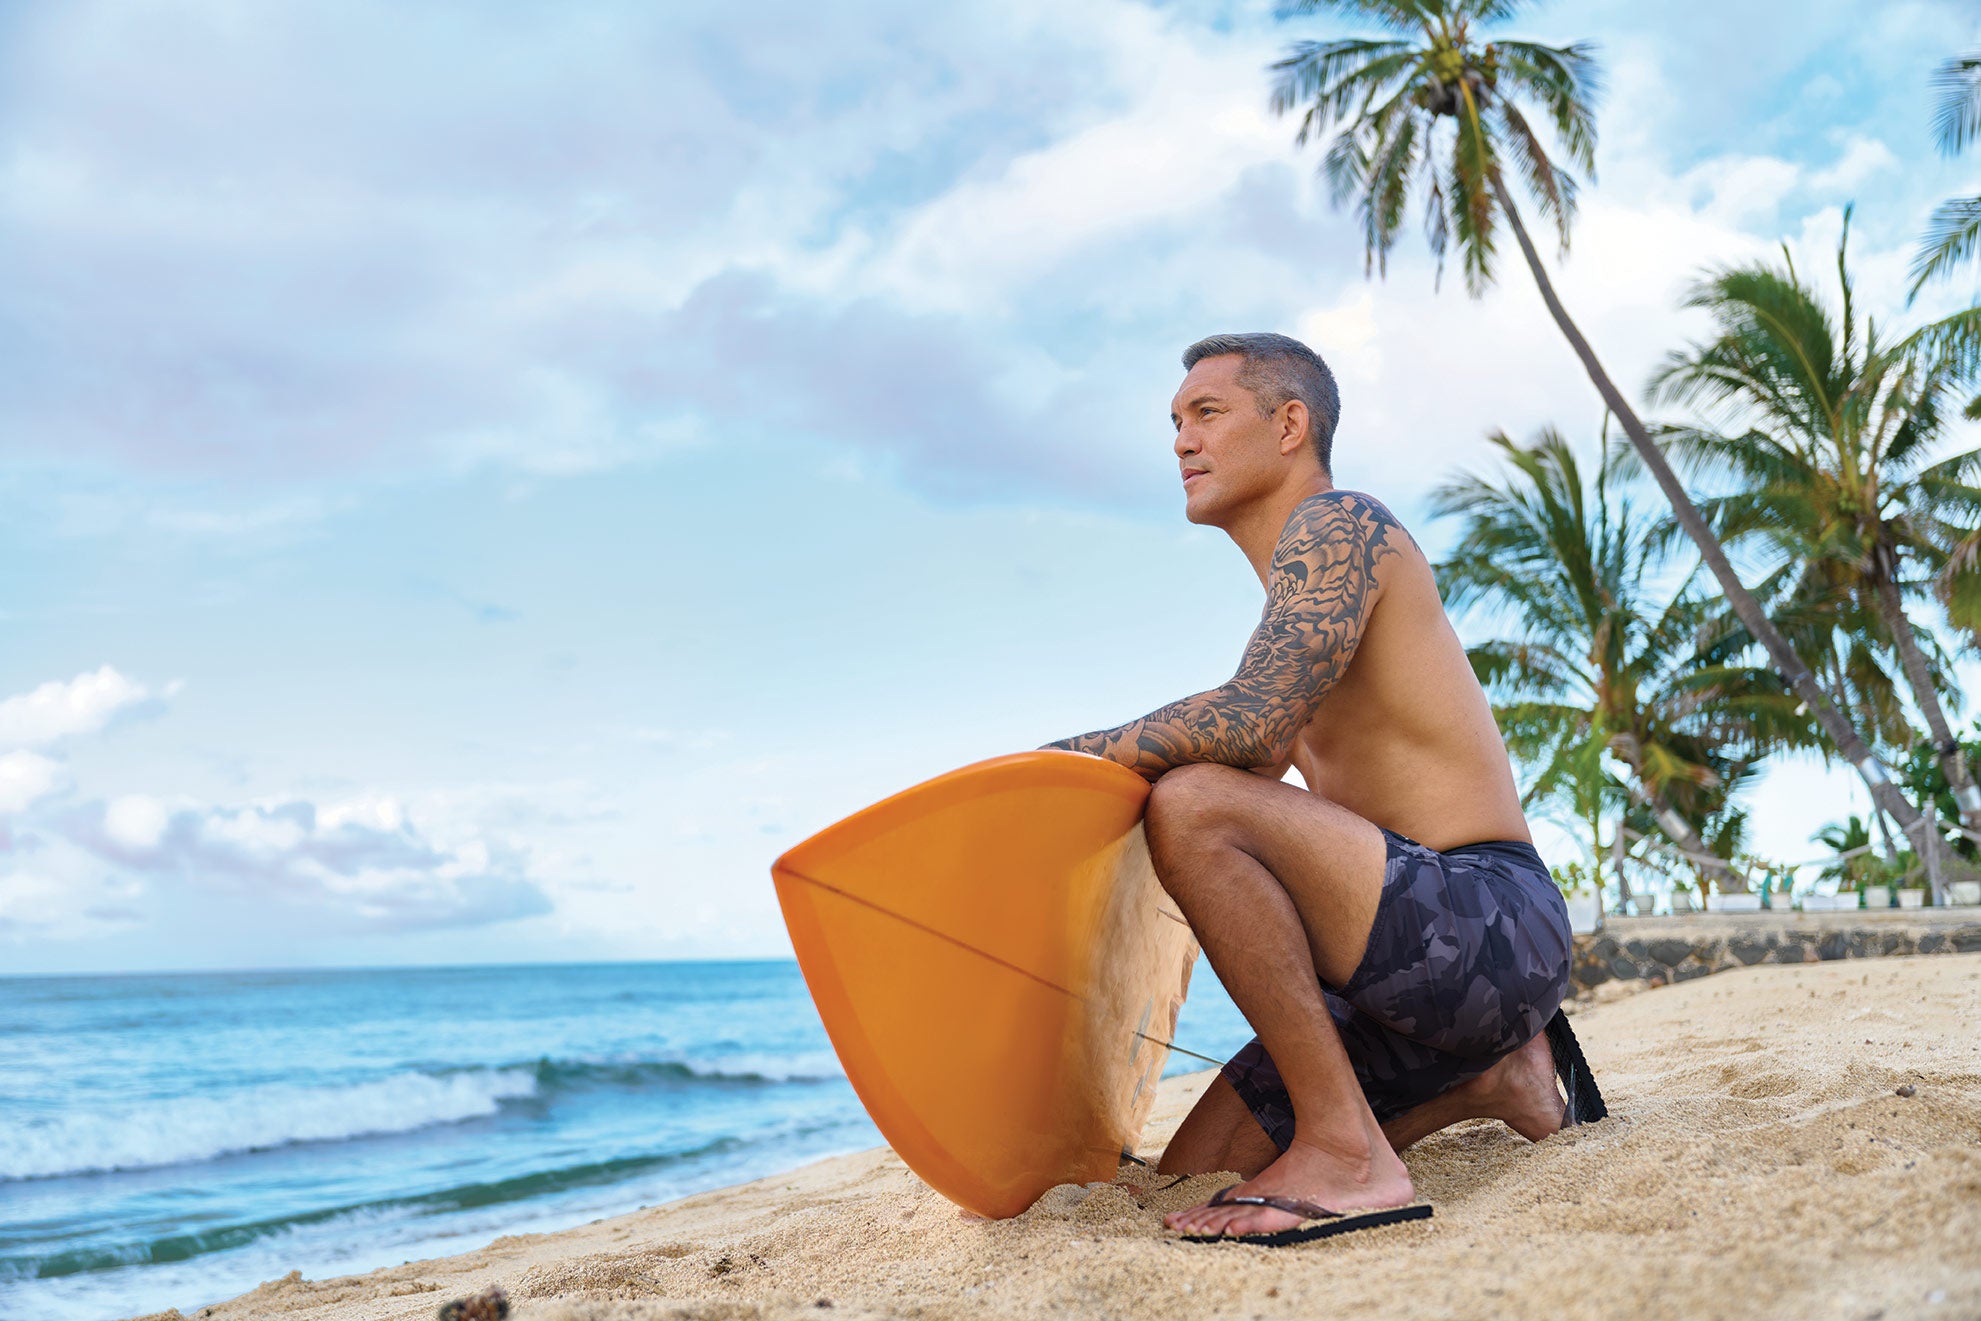 Man sitting on a beach holding a yellow surfboard wearing Locals slippahs